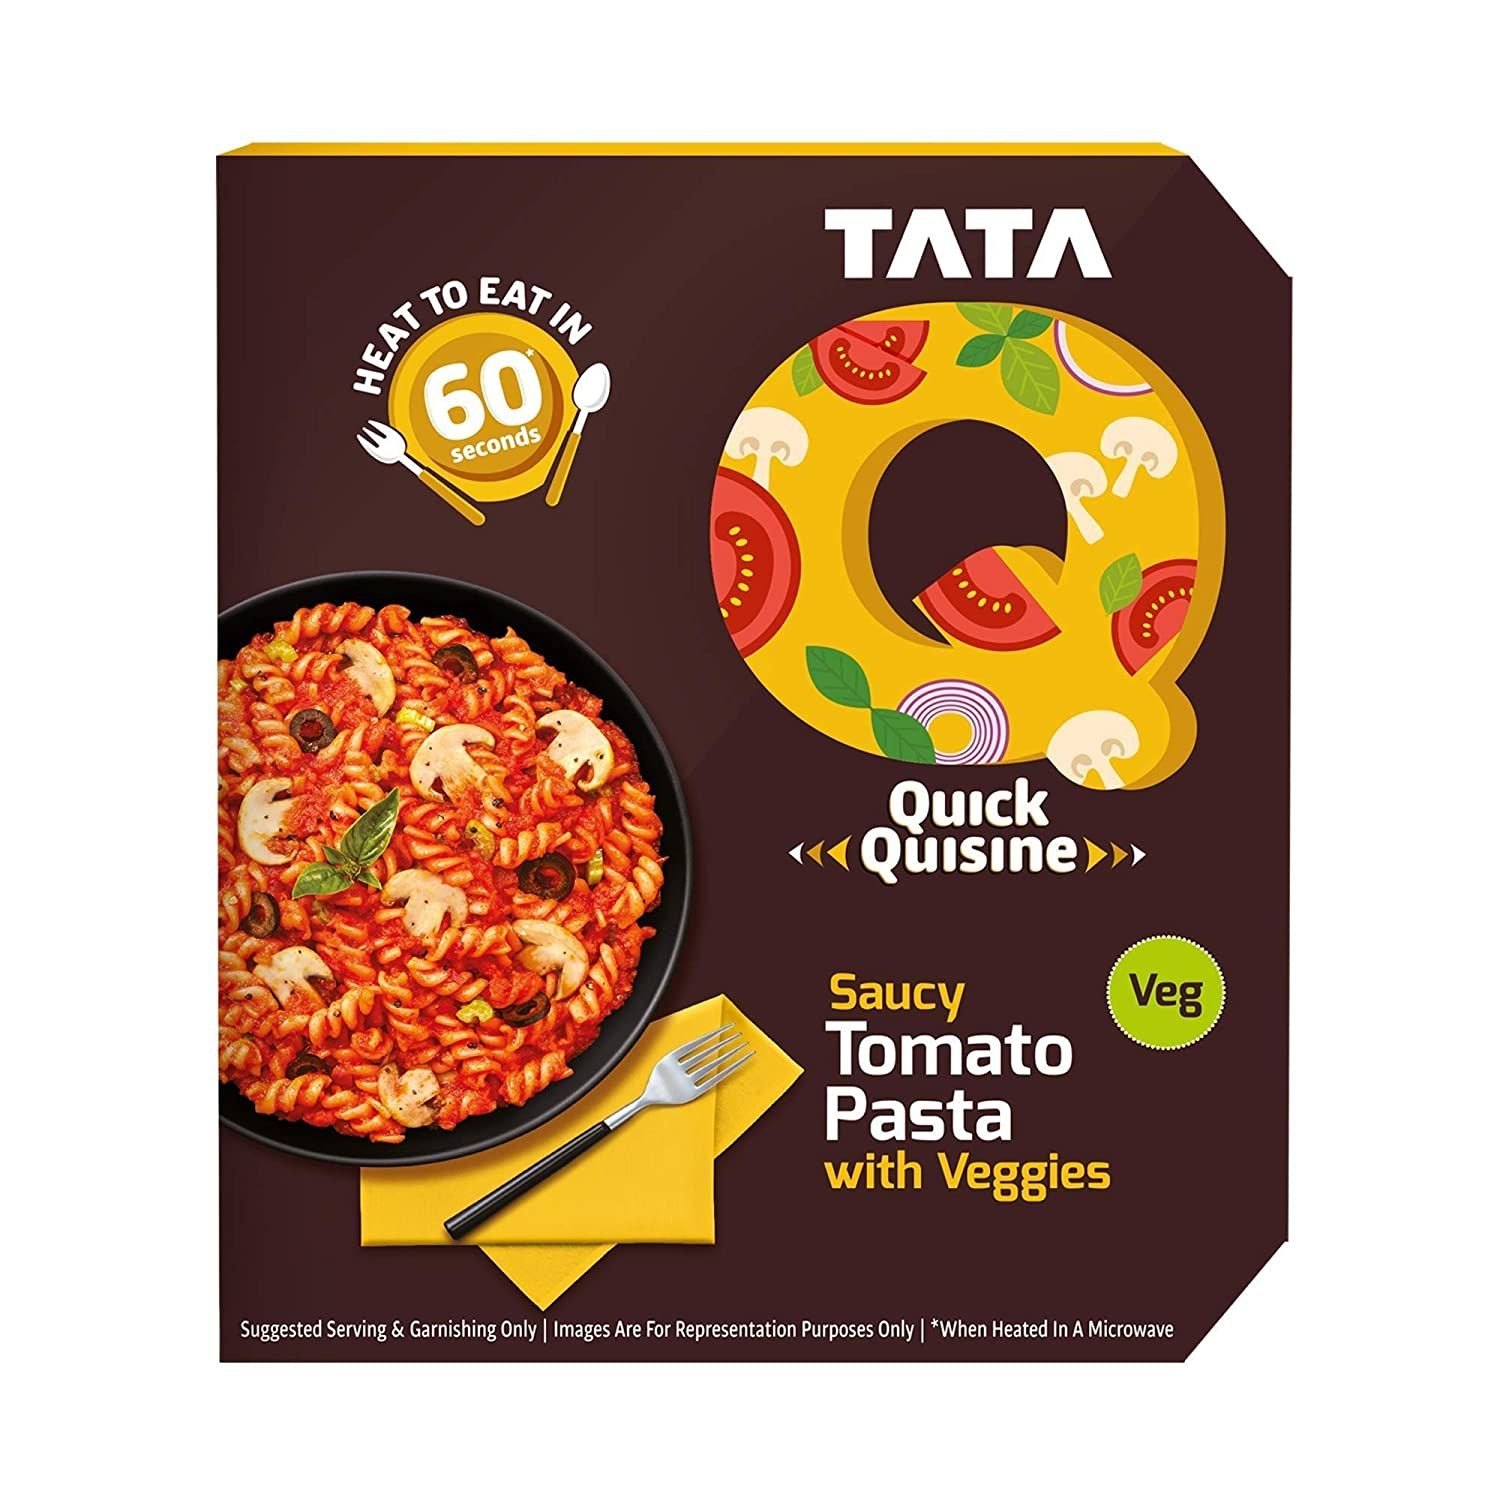 Tata Saucy Tomato Pasta With Veggies Image